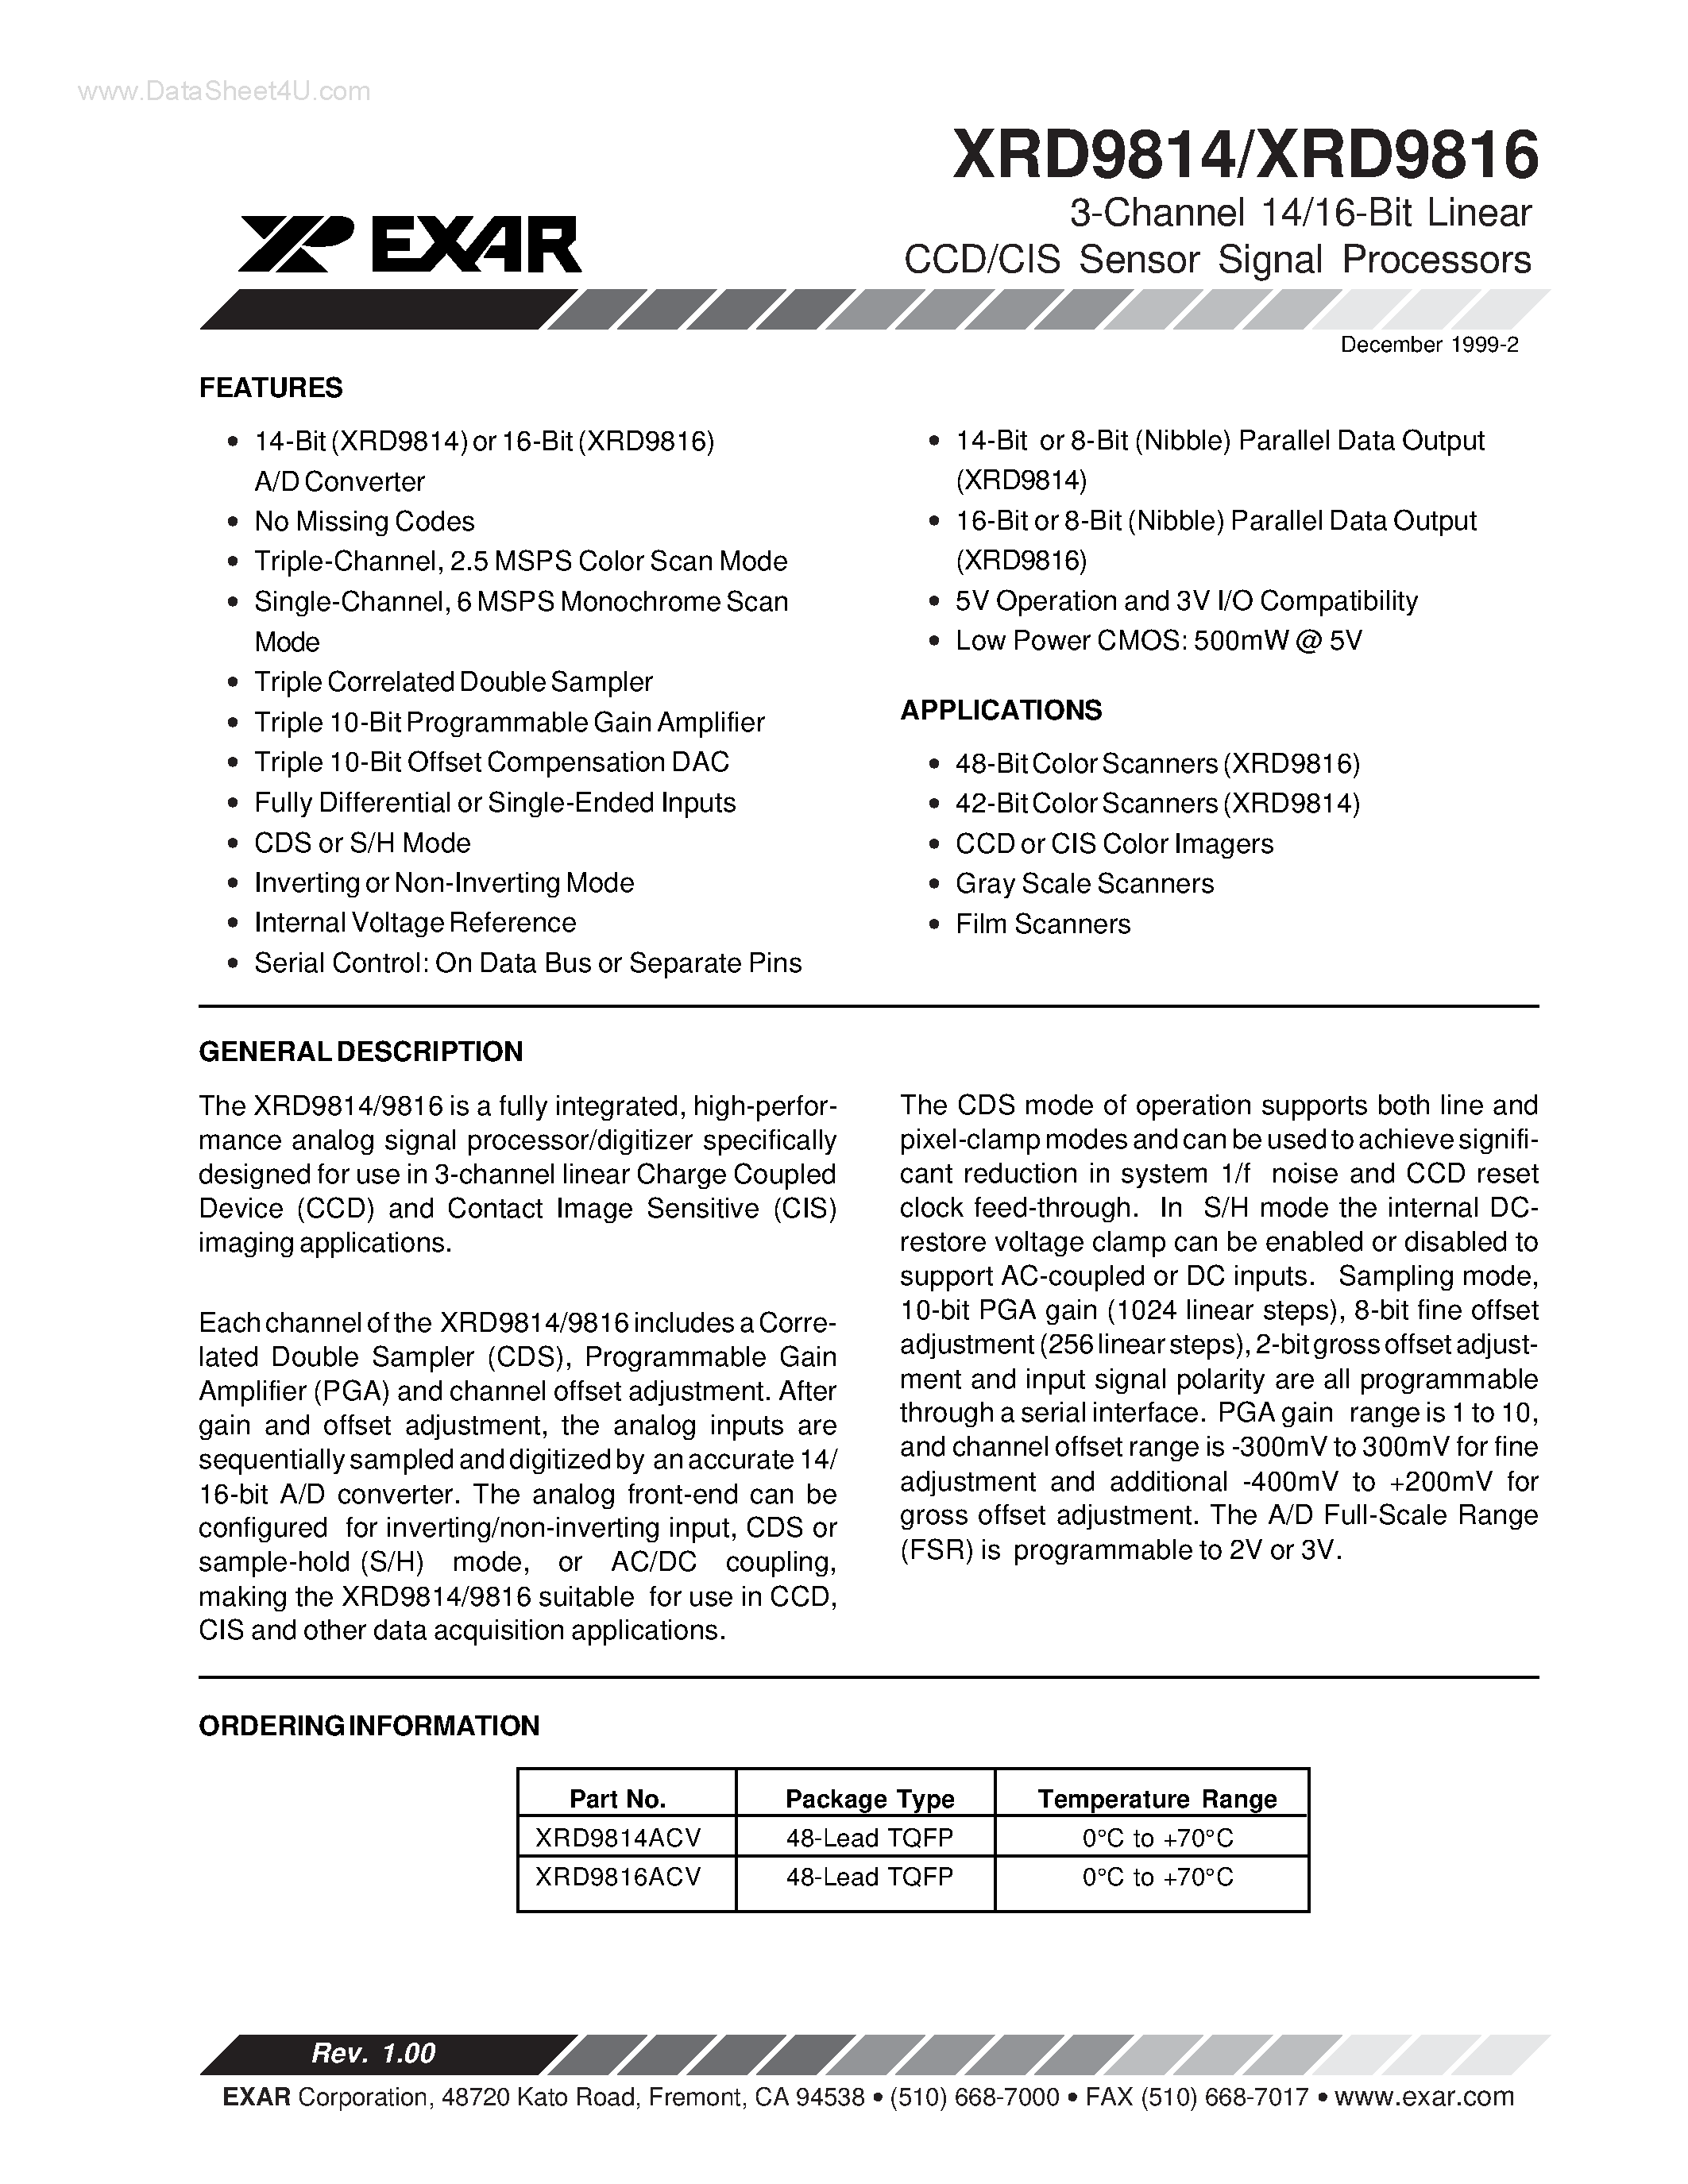 Datasheet XRD9814 - (XRD9814 / XRD9816) 3-Channel 14/16-Bit Linear CCD/CIS Sensor Signal Processors page 1